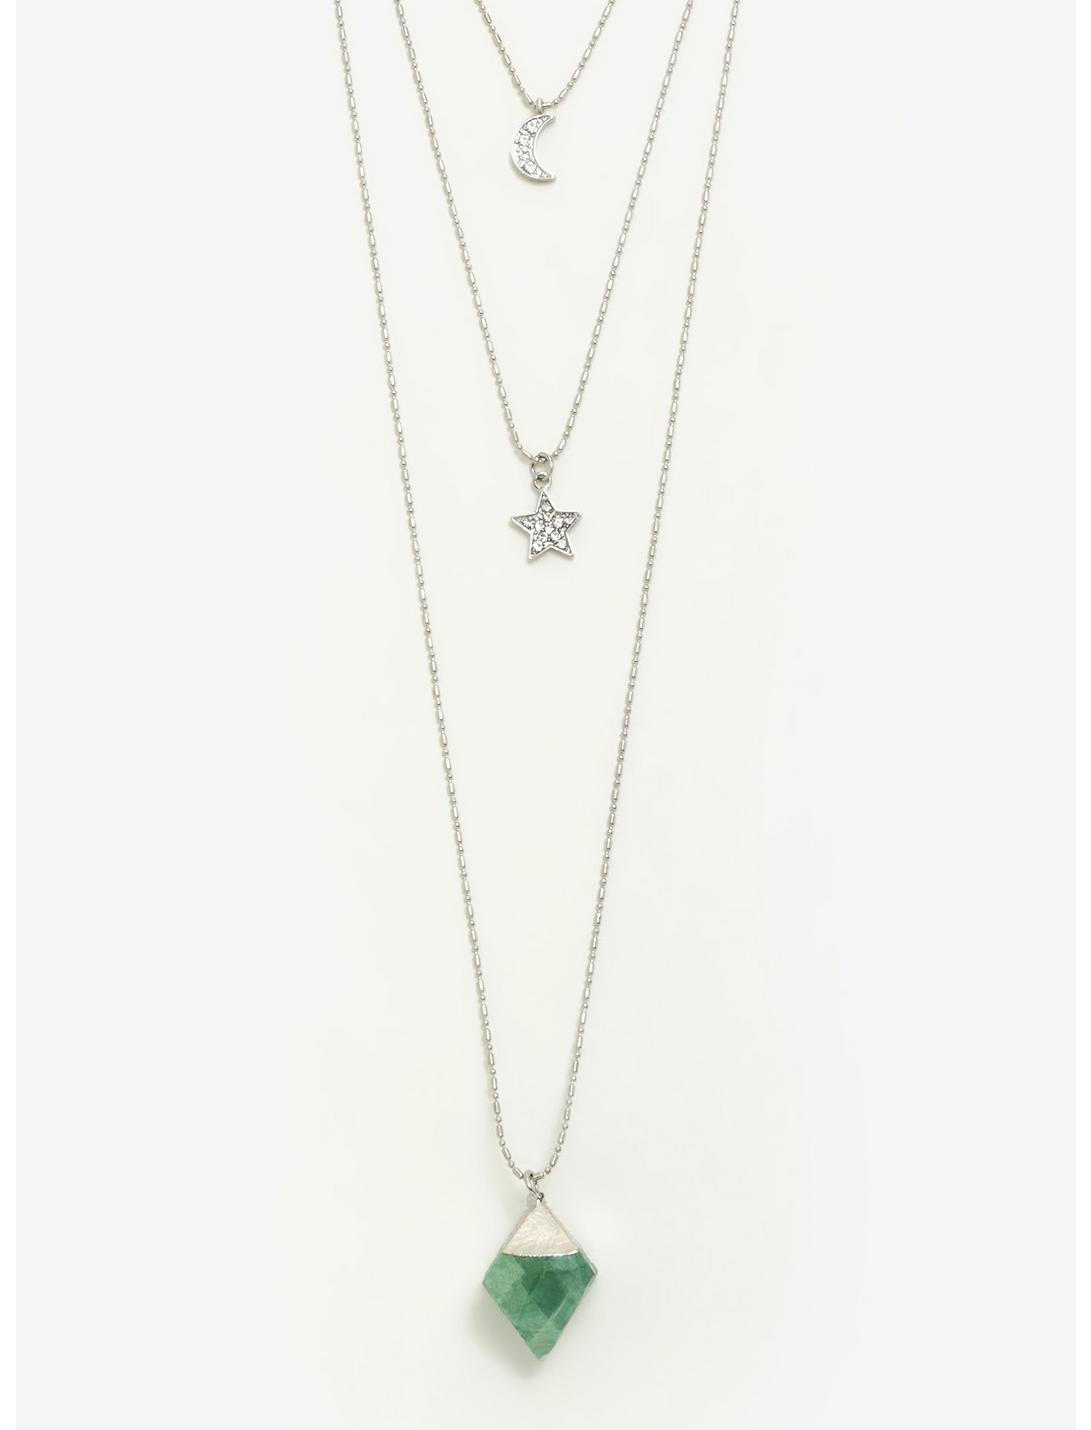 Blackheart Moon Star Crystal Layered Necklace, , hi-res